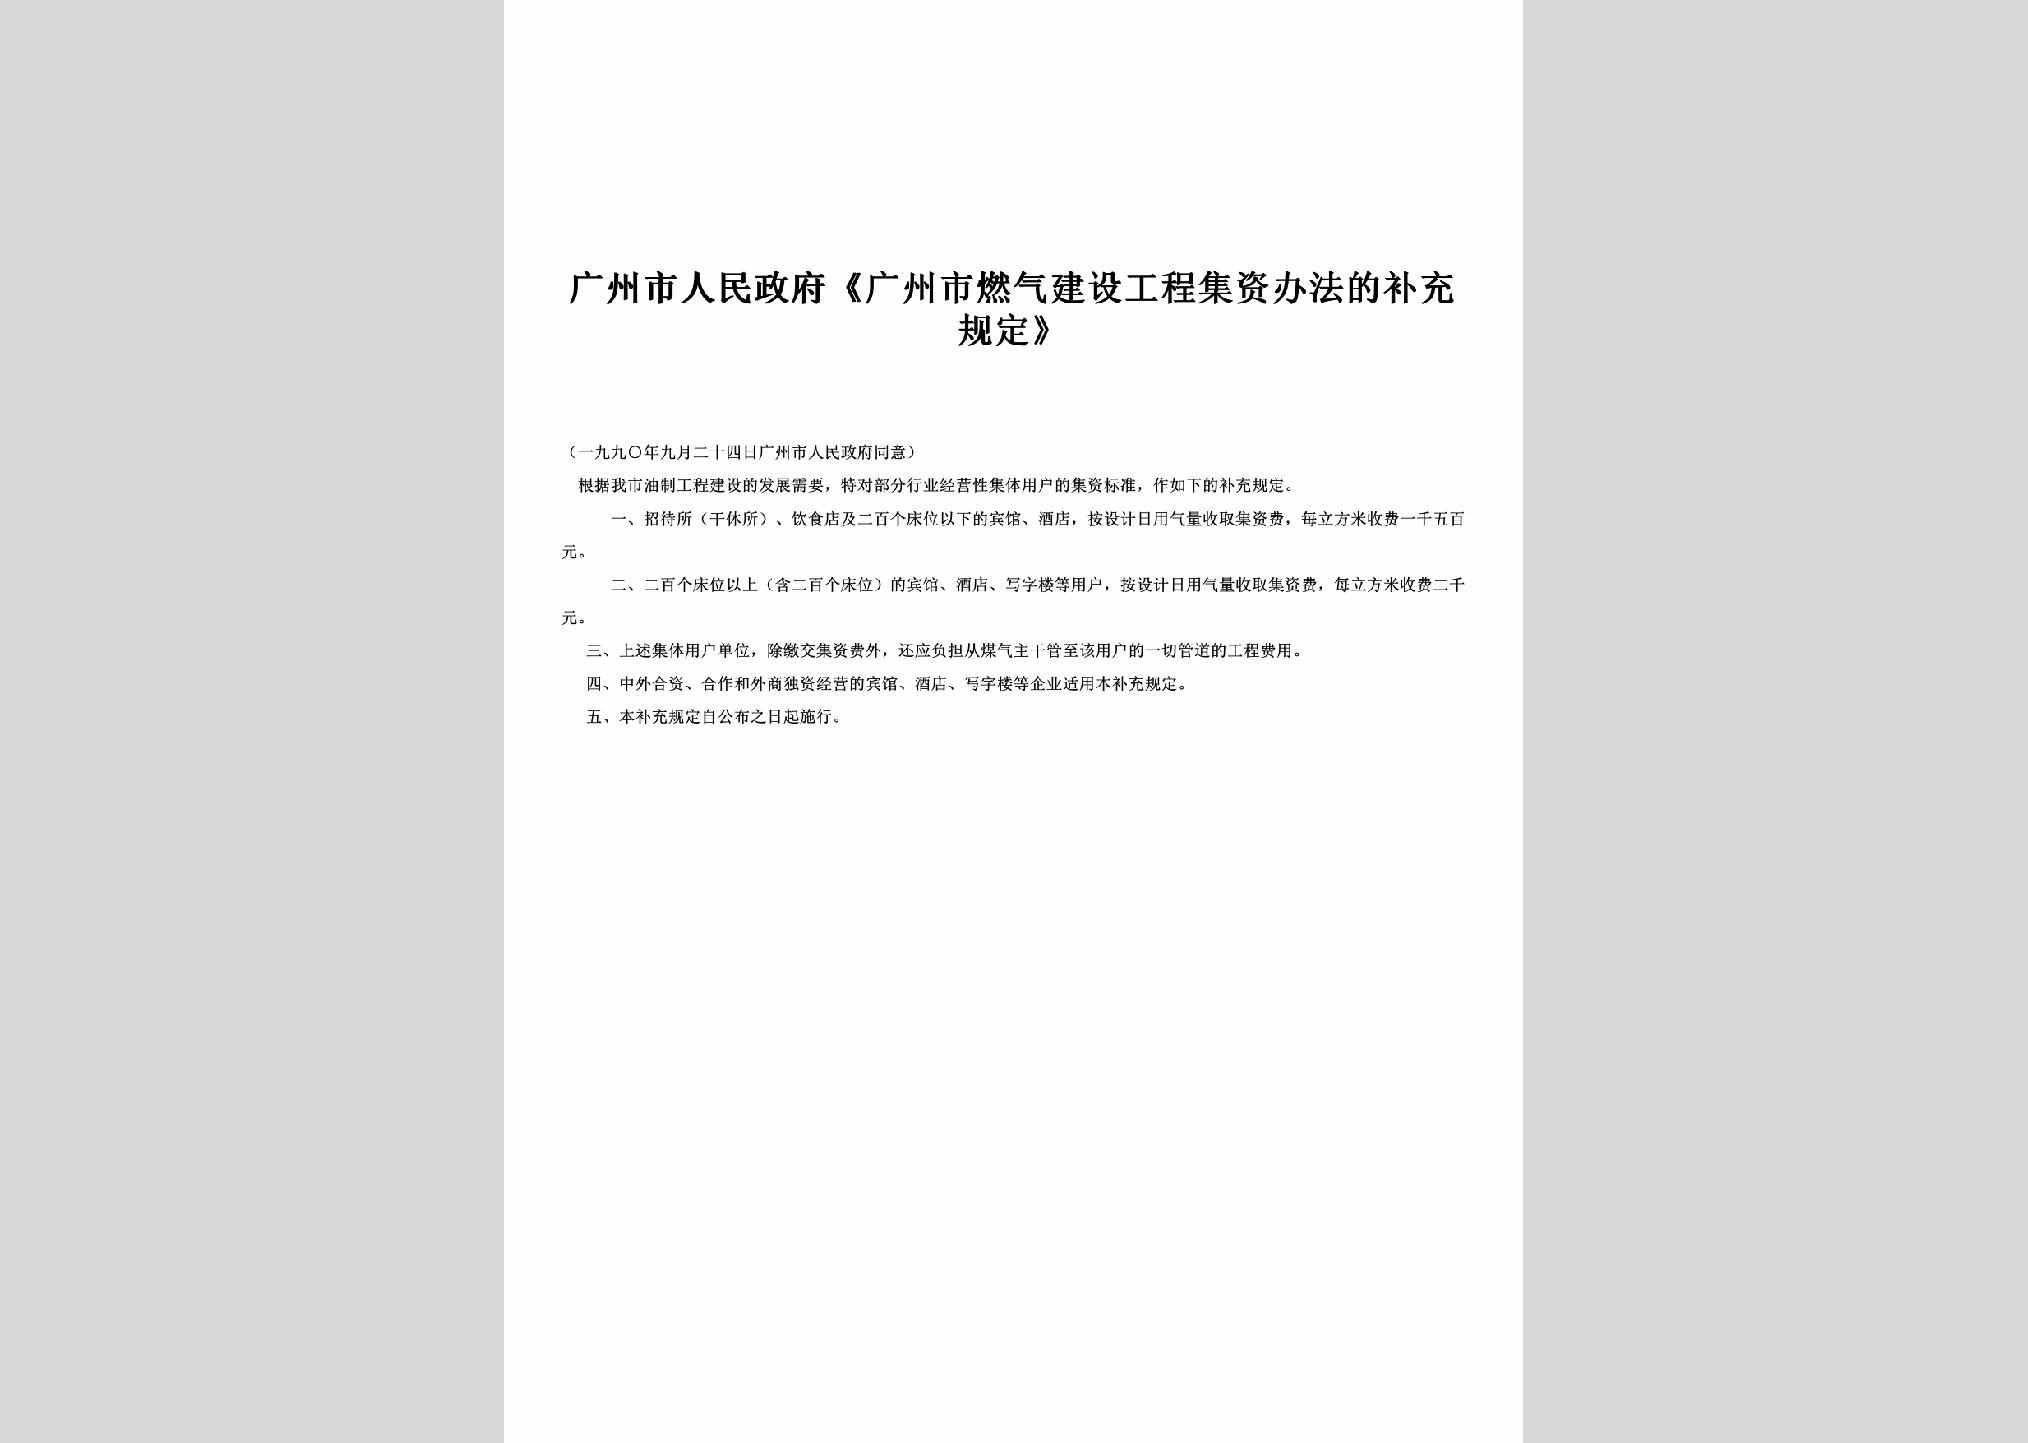 GD-RQJSBCGD-1990：《广州市燃气建设工程集资办法的补充规定》